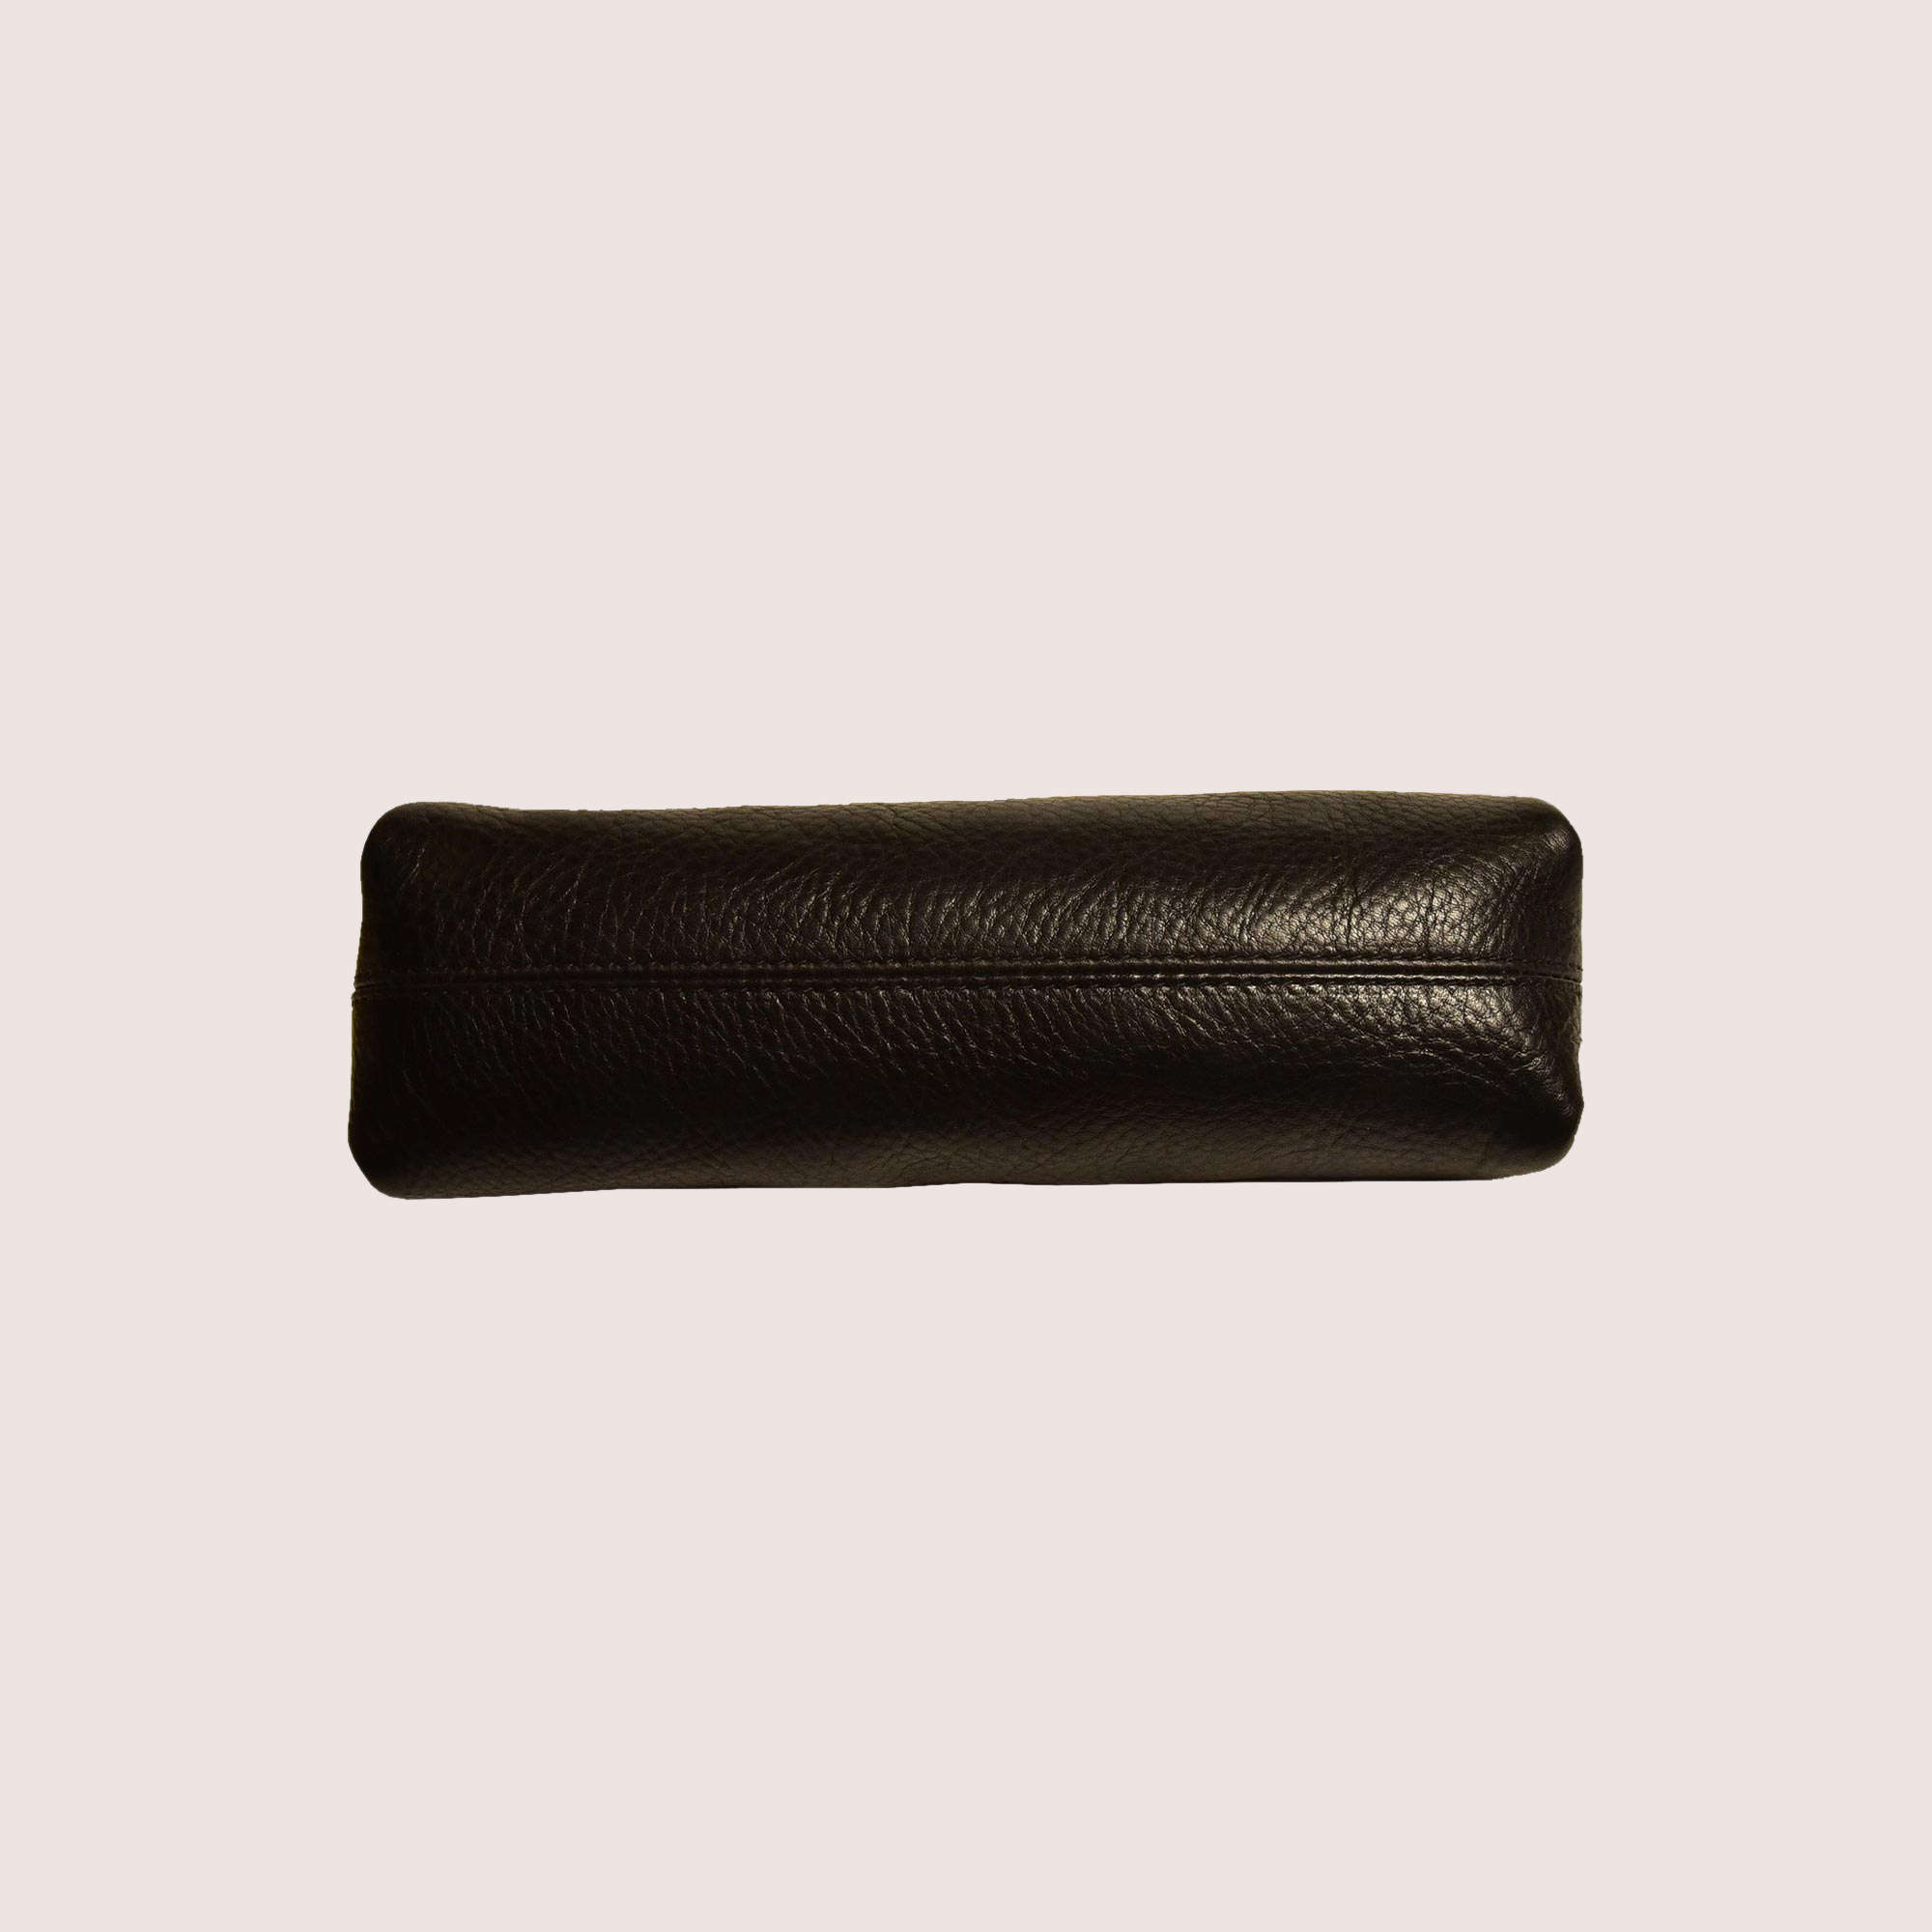 Pen or Multi Purpose Leather Pouch